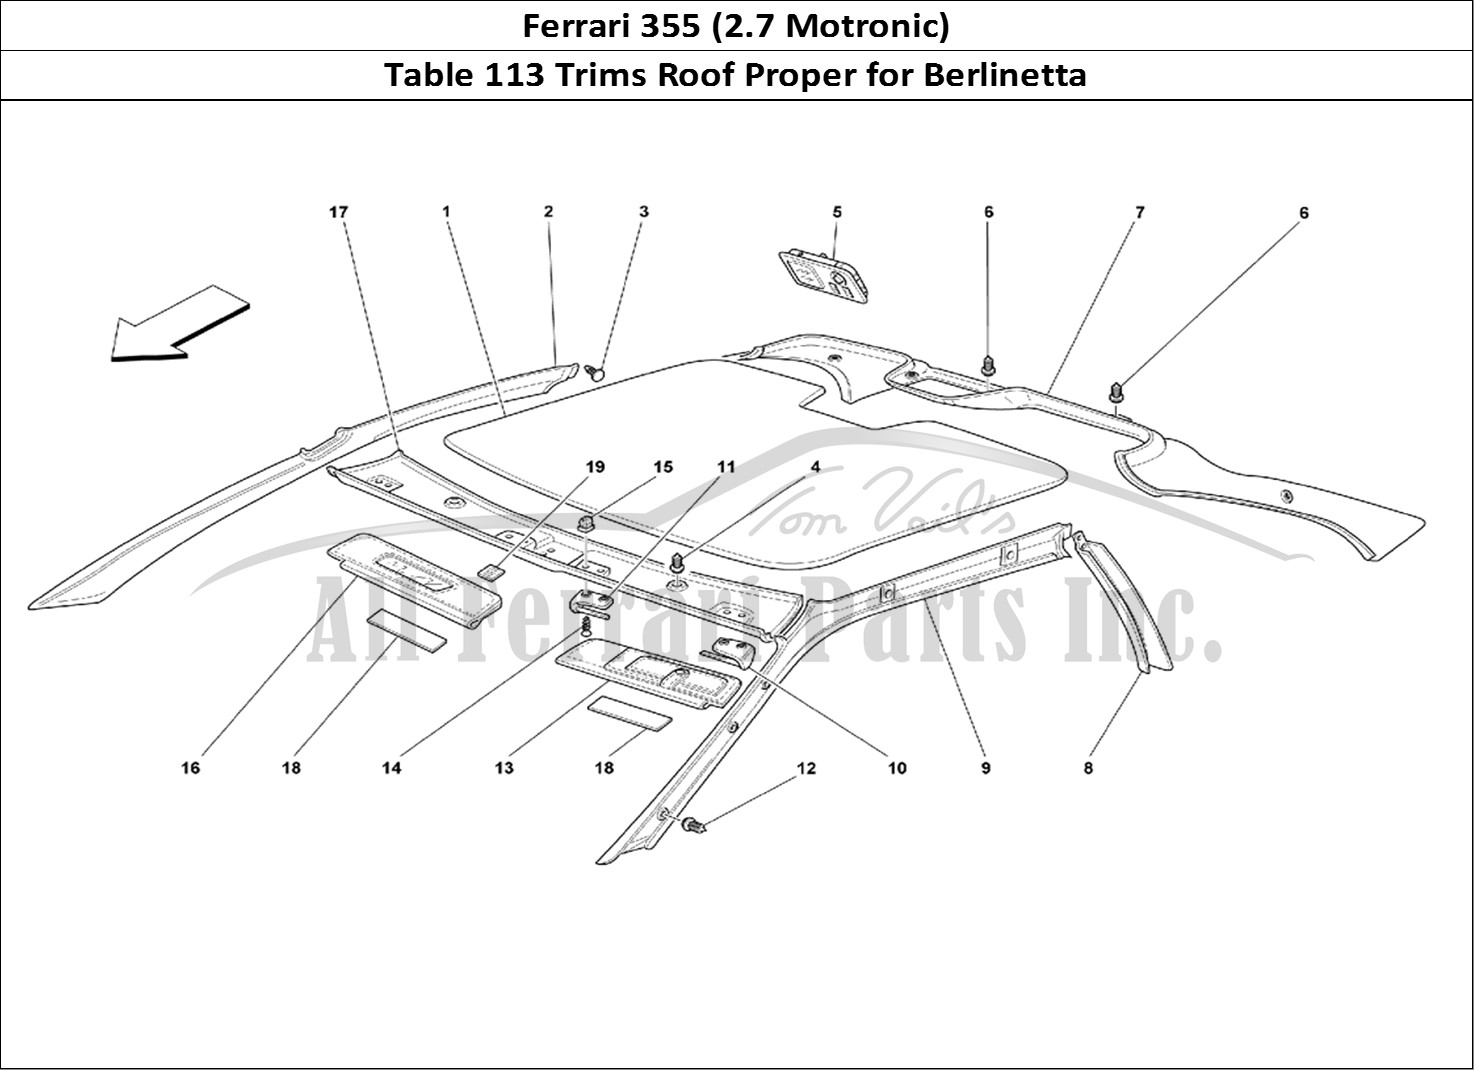 Ferrari Parts Ferrari 355 (2.7 Motronic) Page 113 Roof Trims -Valid for Ber